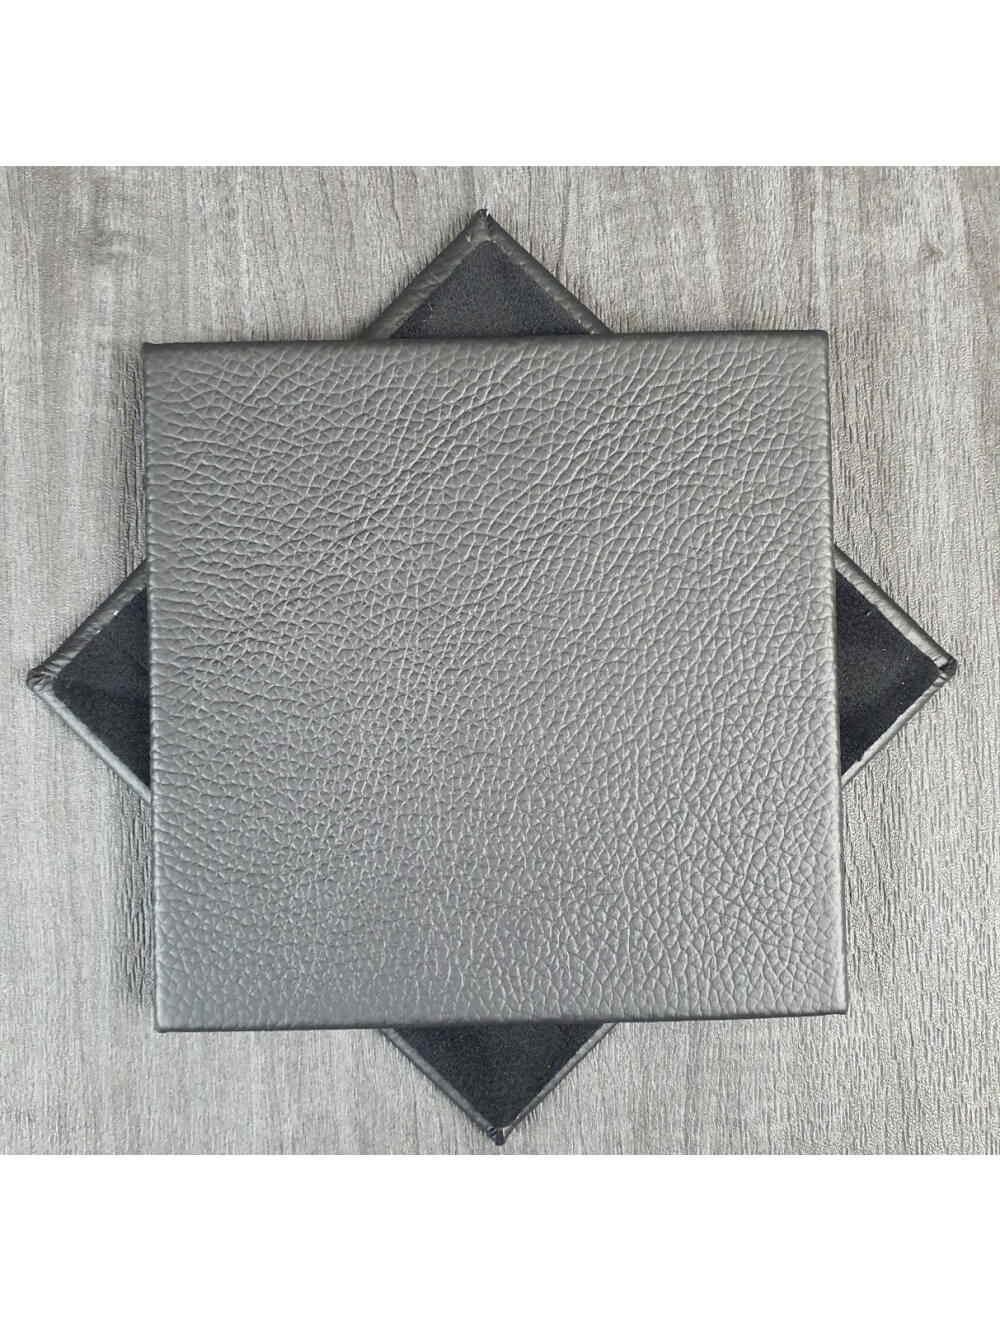 Sort Shelly Leather Coaster- 10 cm SQ (salgsartikel)